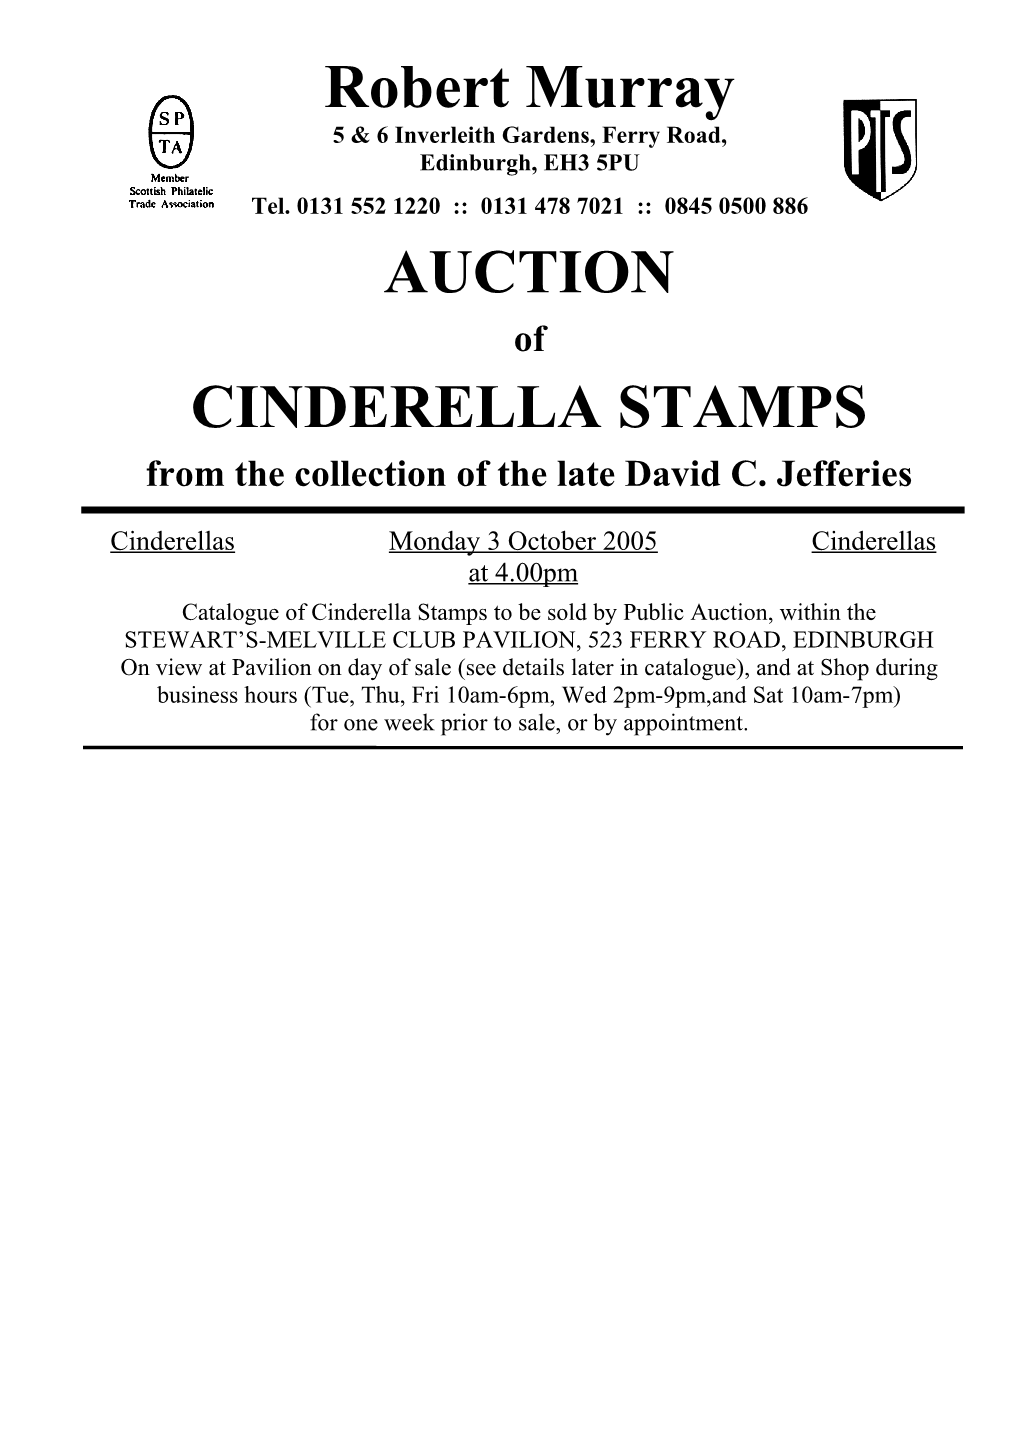 Robert Murray Stamp Auction